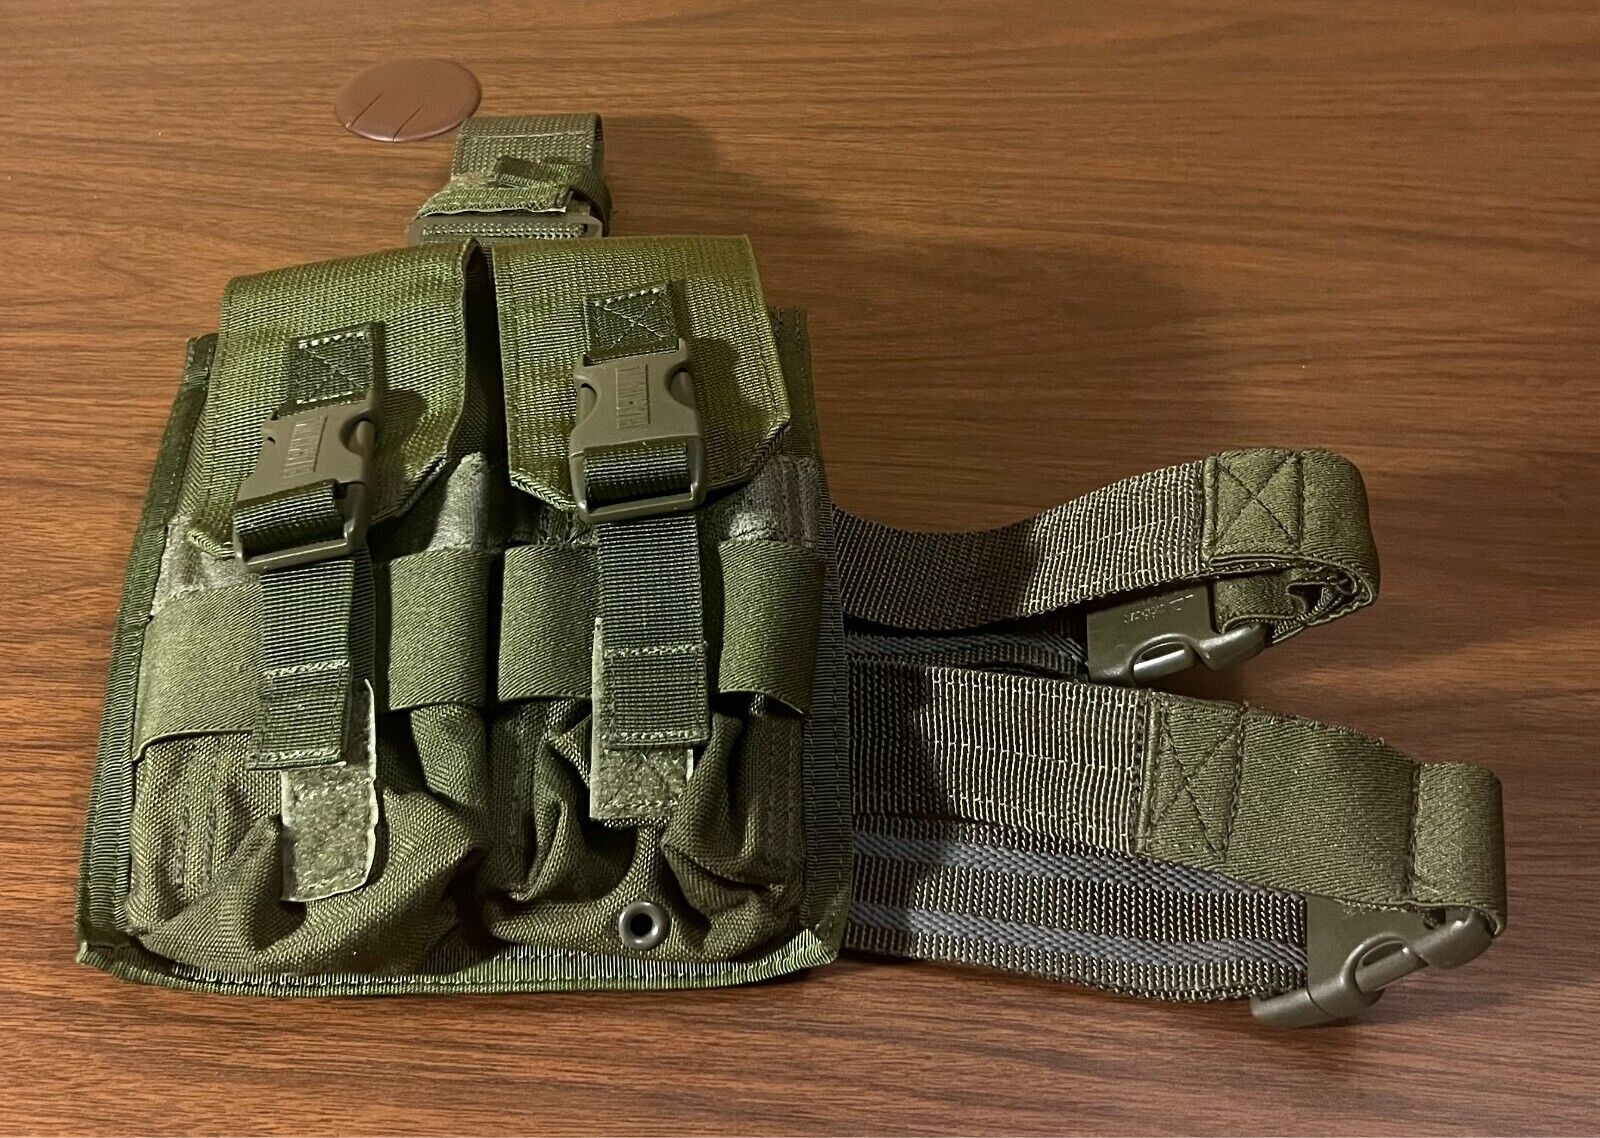 Blackhawk Tactical/Field Double Mag Pouch - Drop Leg Pouch - Hunter Green - GUC